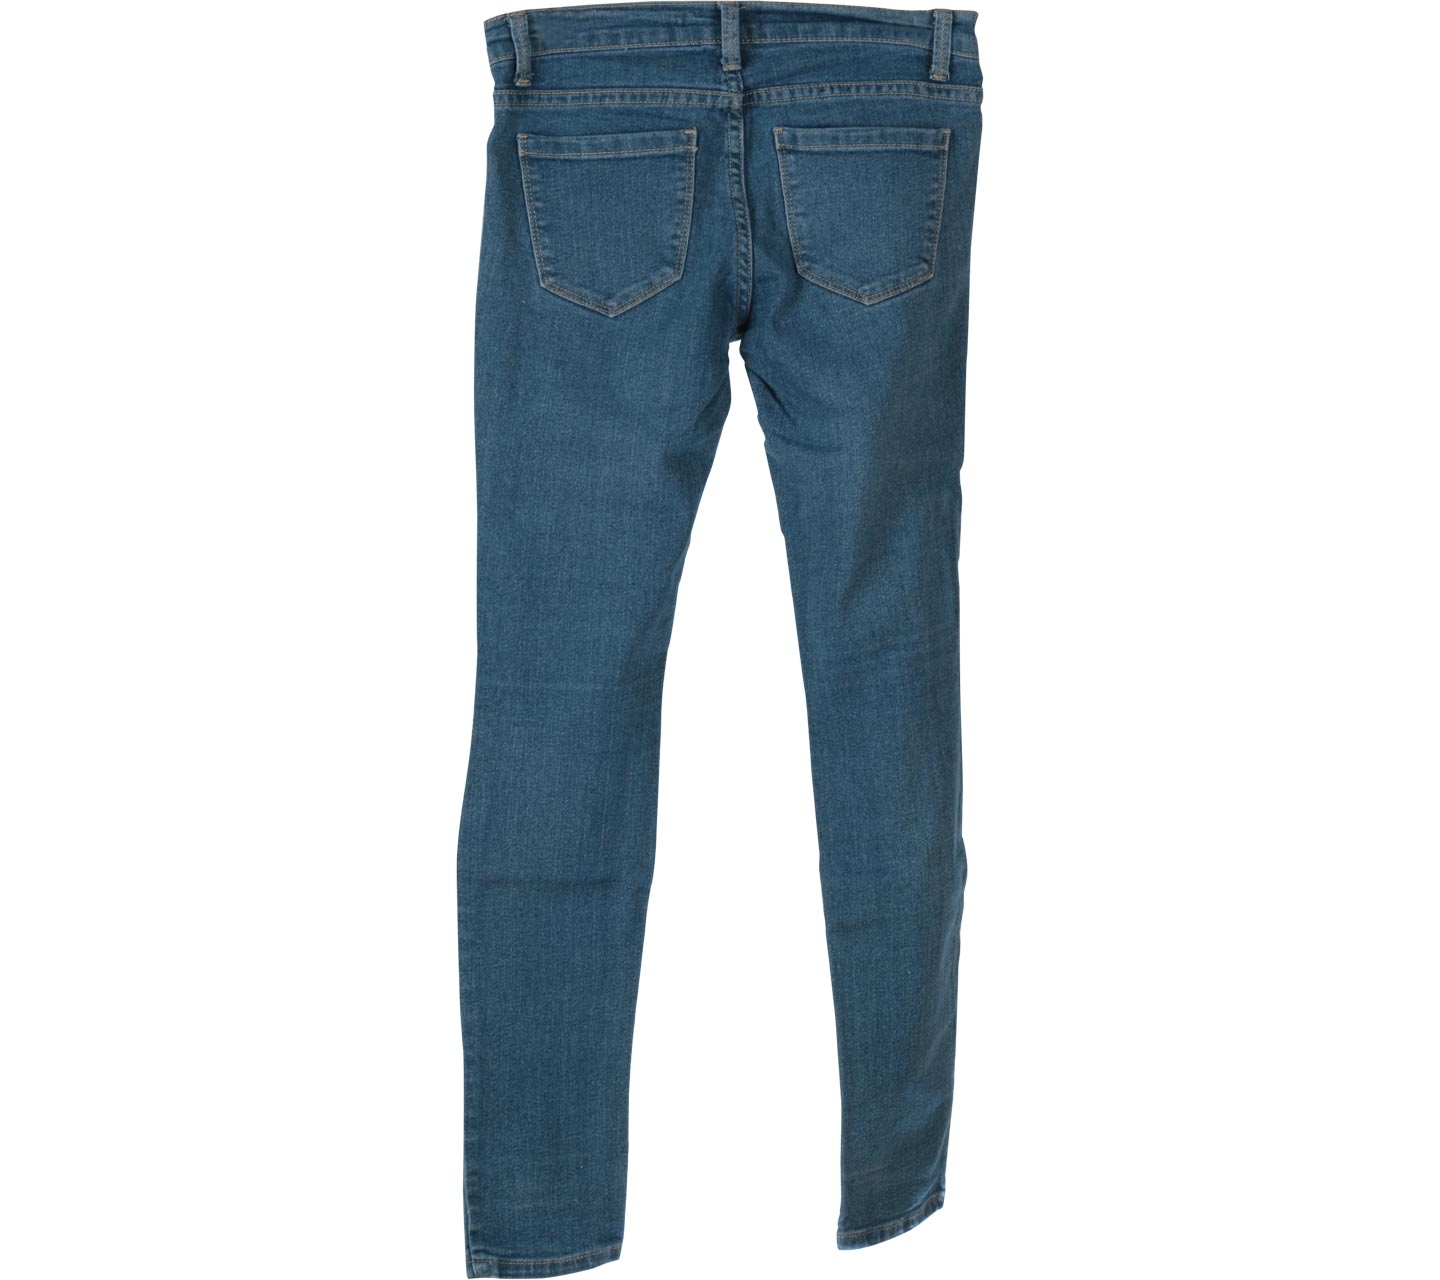 Forever 21 Blue Skinny Jeans Pants